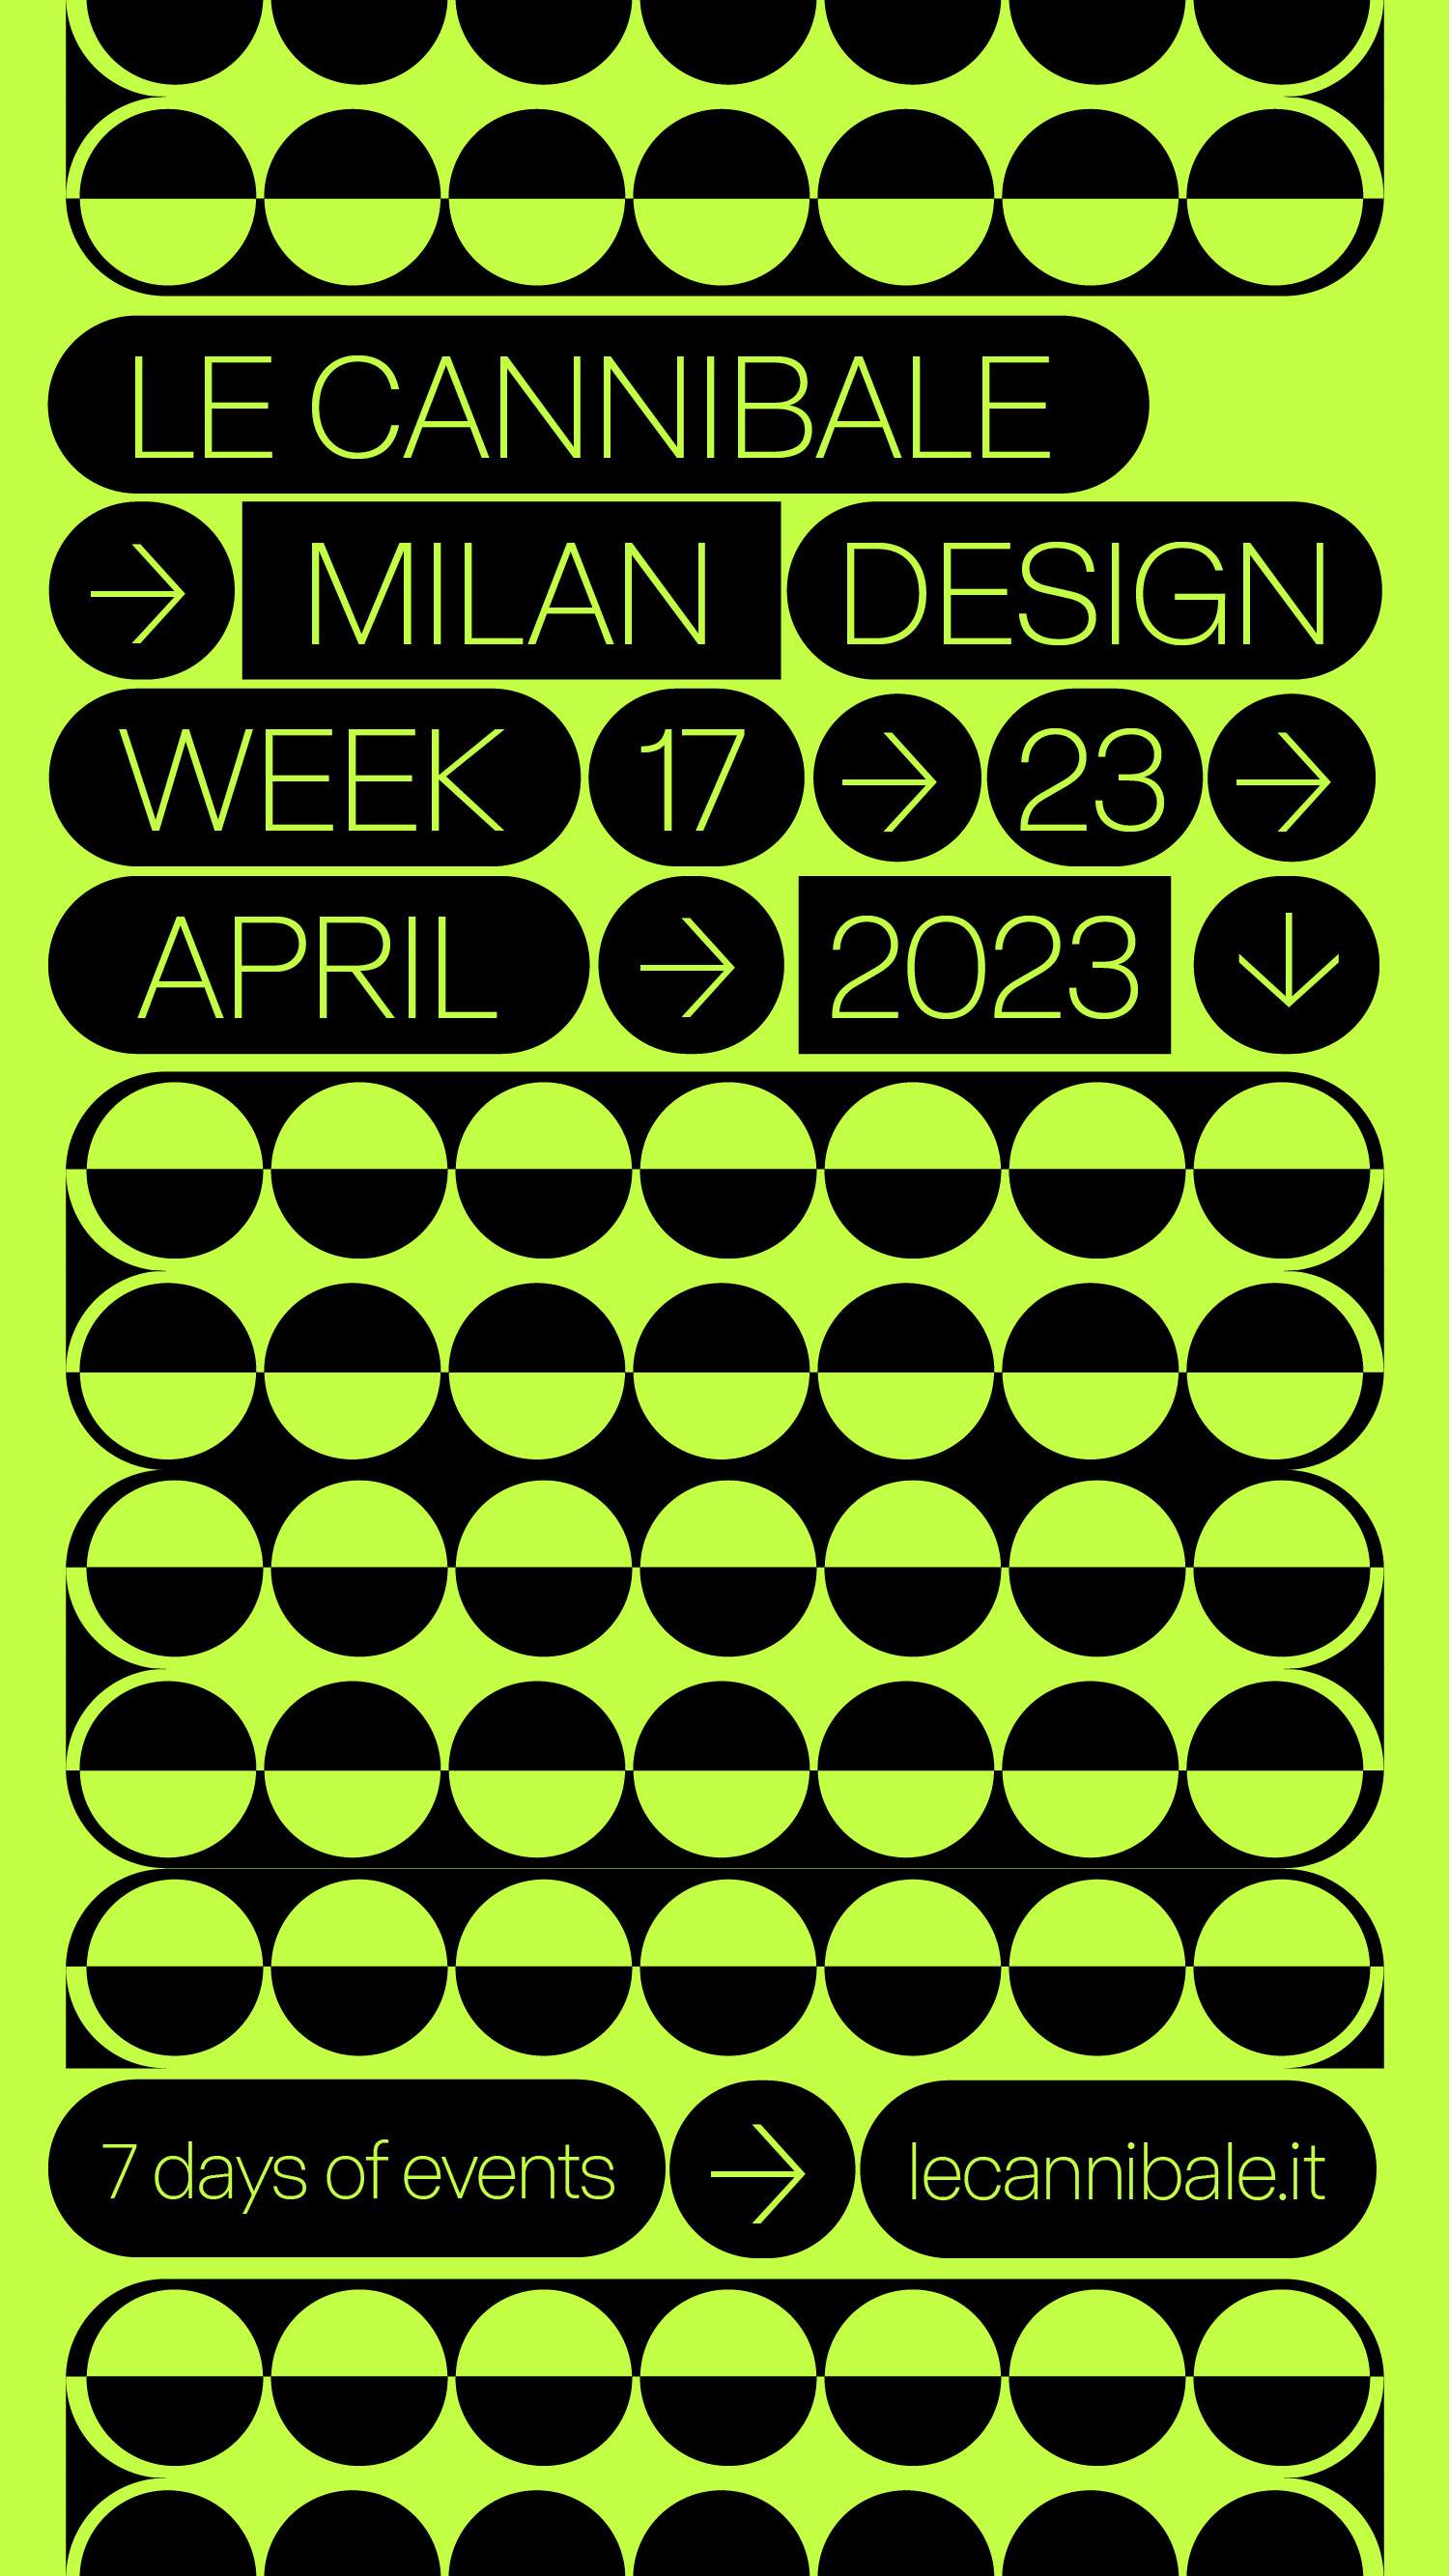 Le Cannibale - Milan Design Week 2023 at TBA - Various Location, Milan